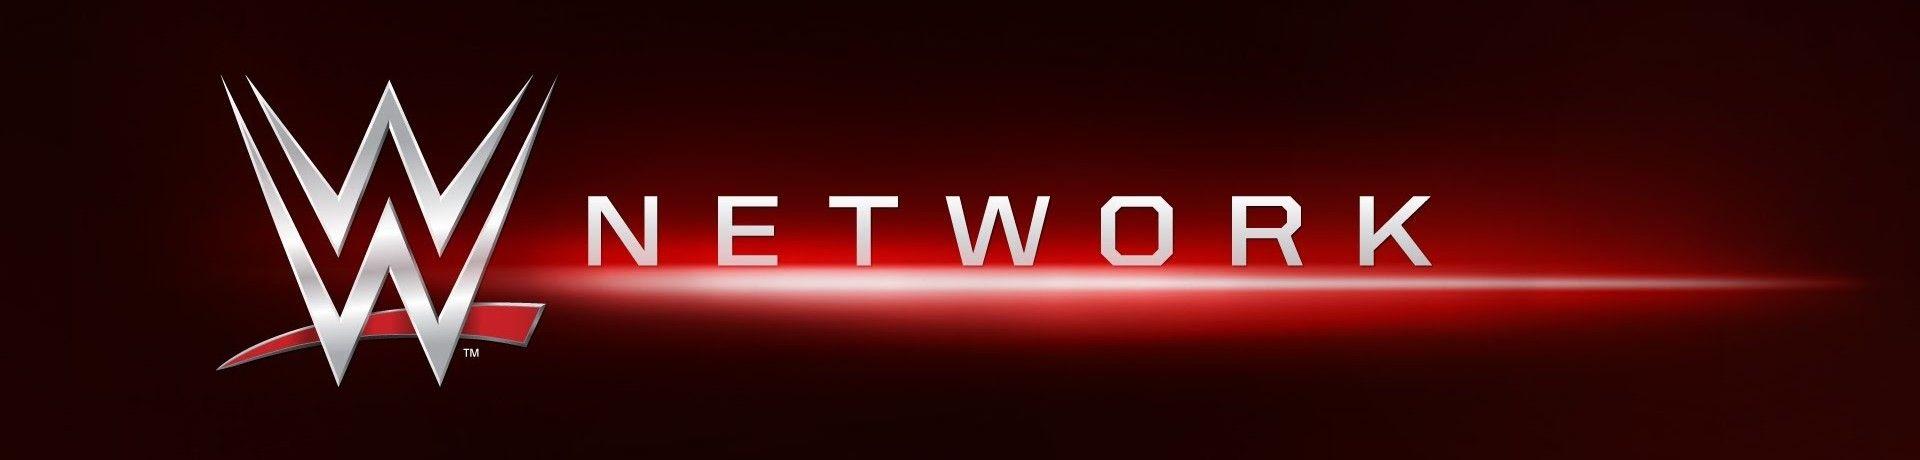 Wwe Network Logo Wallpaper, PC Wwe Network Logo Wallpaper Most